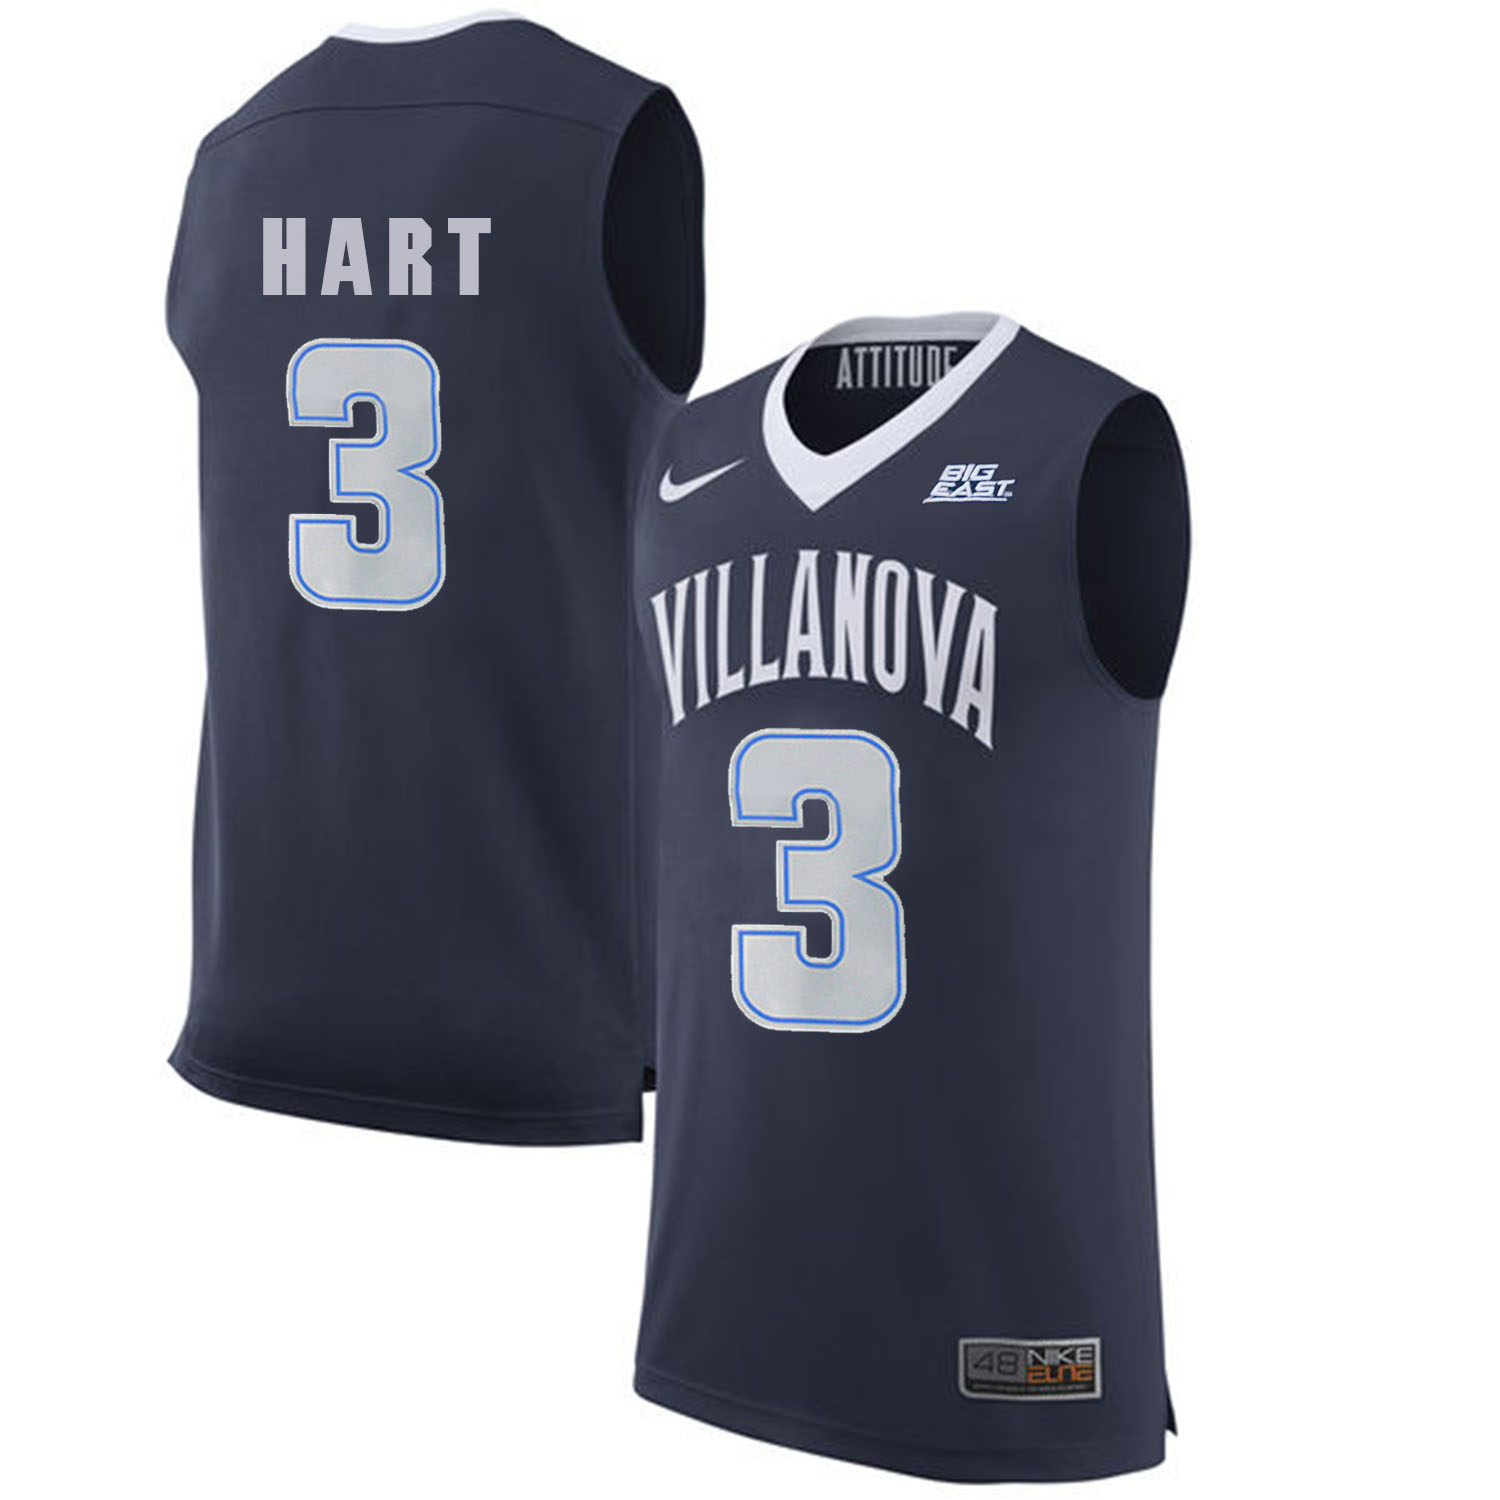 Villanova Wildcats 3 Josh Hart Navy College Basketball Elite Jersey